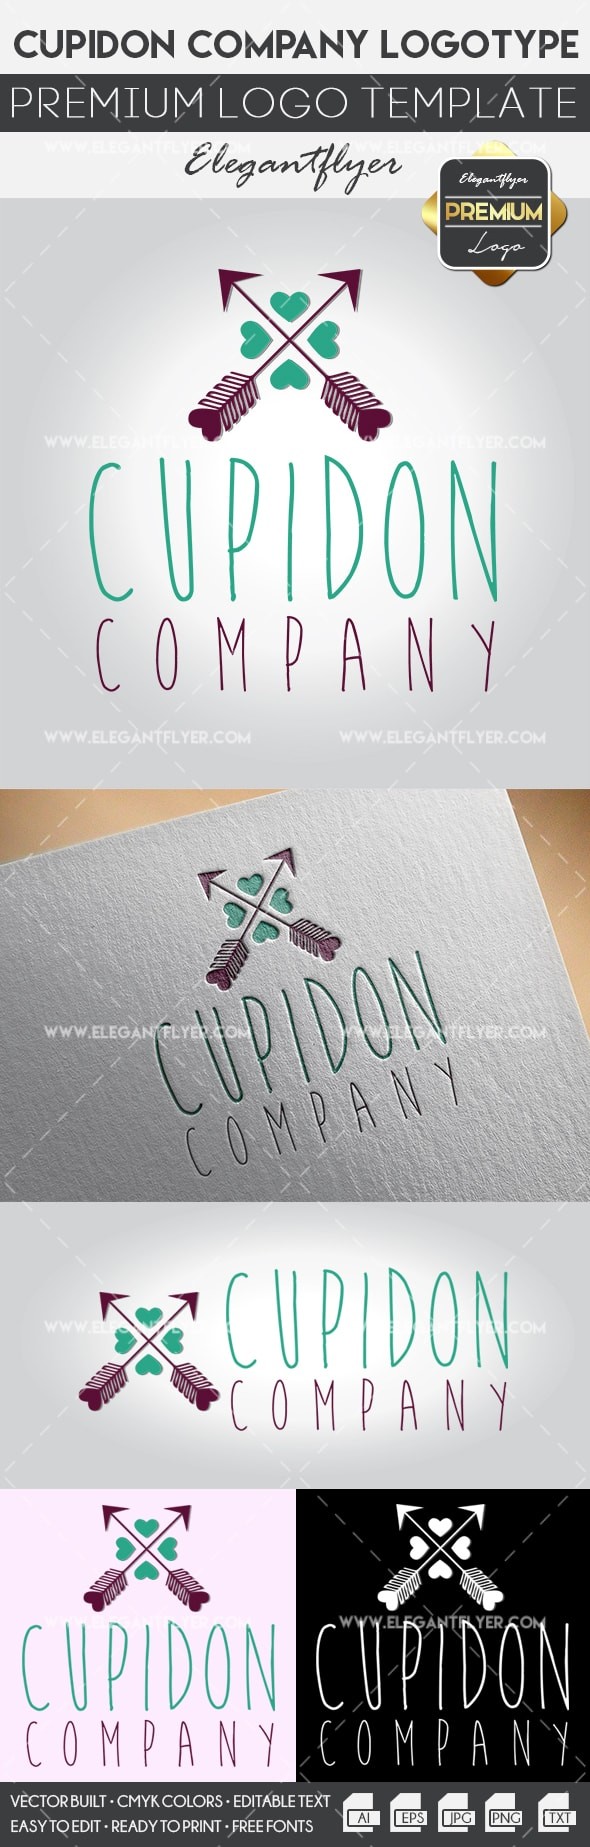 Cupidon Company. by ElegantFlyer